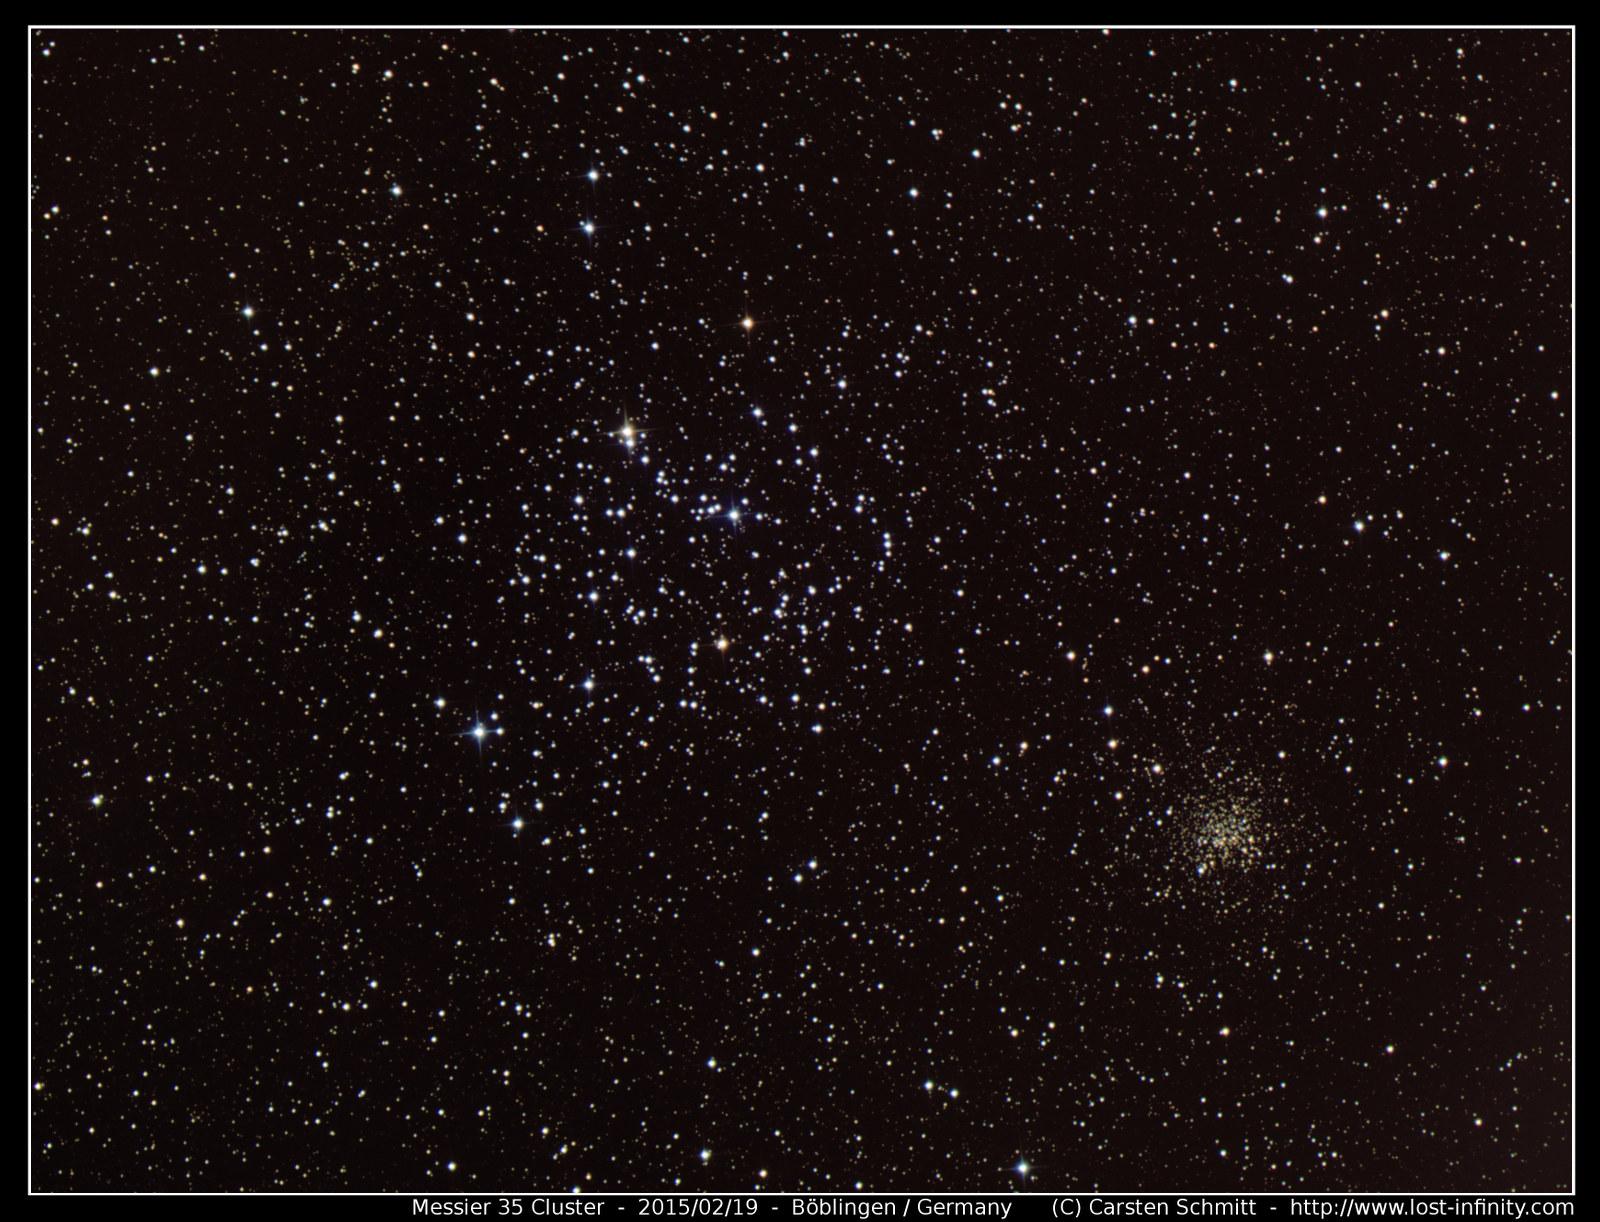 Messier 35 cluster - 2015/02/19